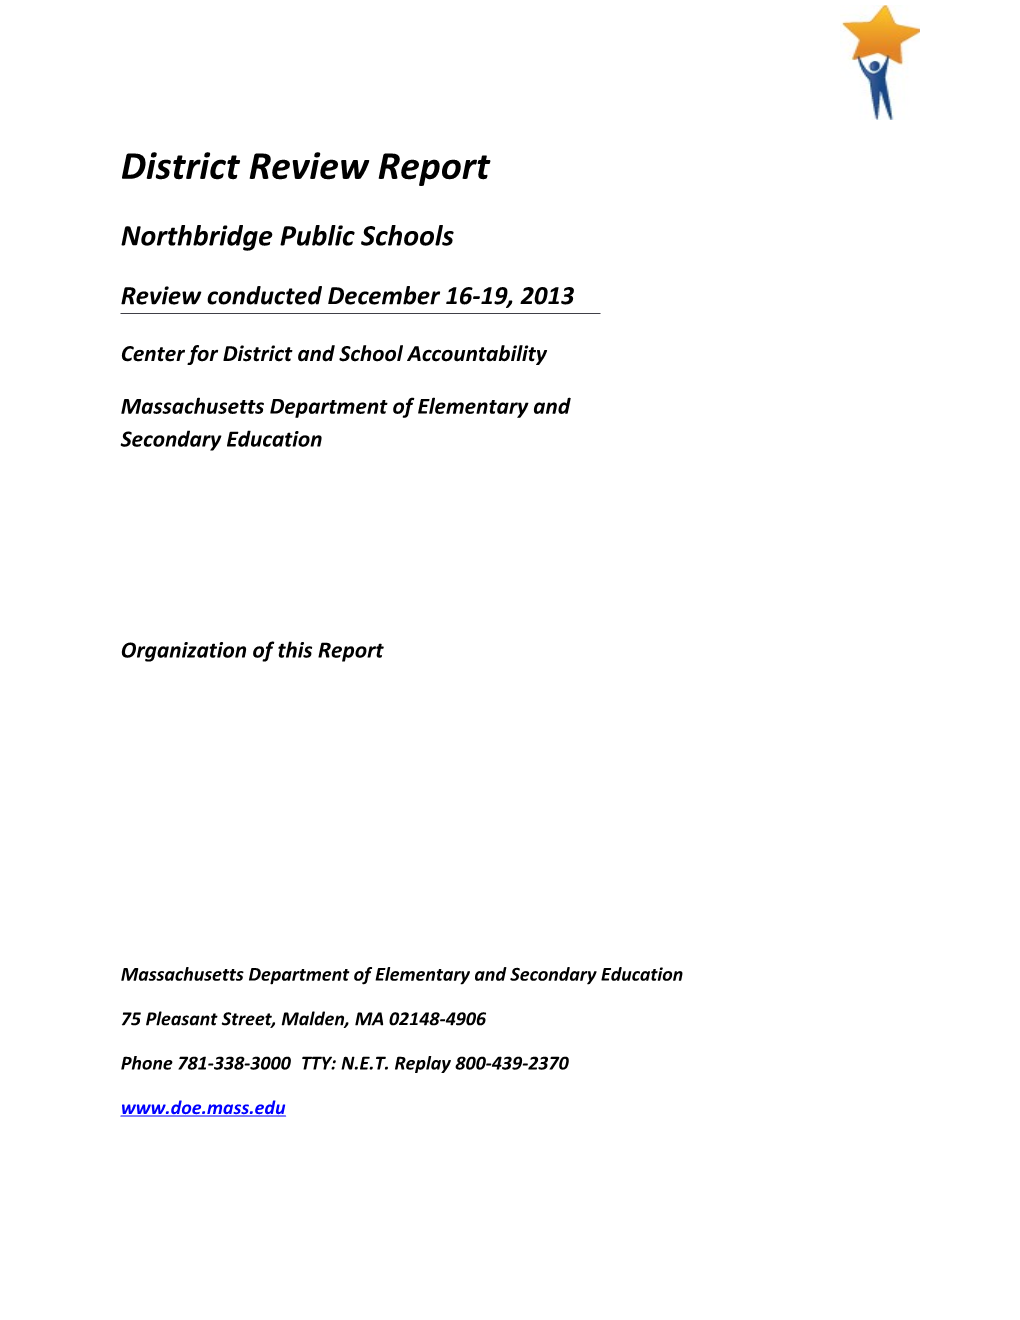 Northbridge District Review Report, 2014